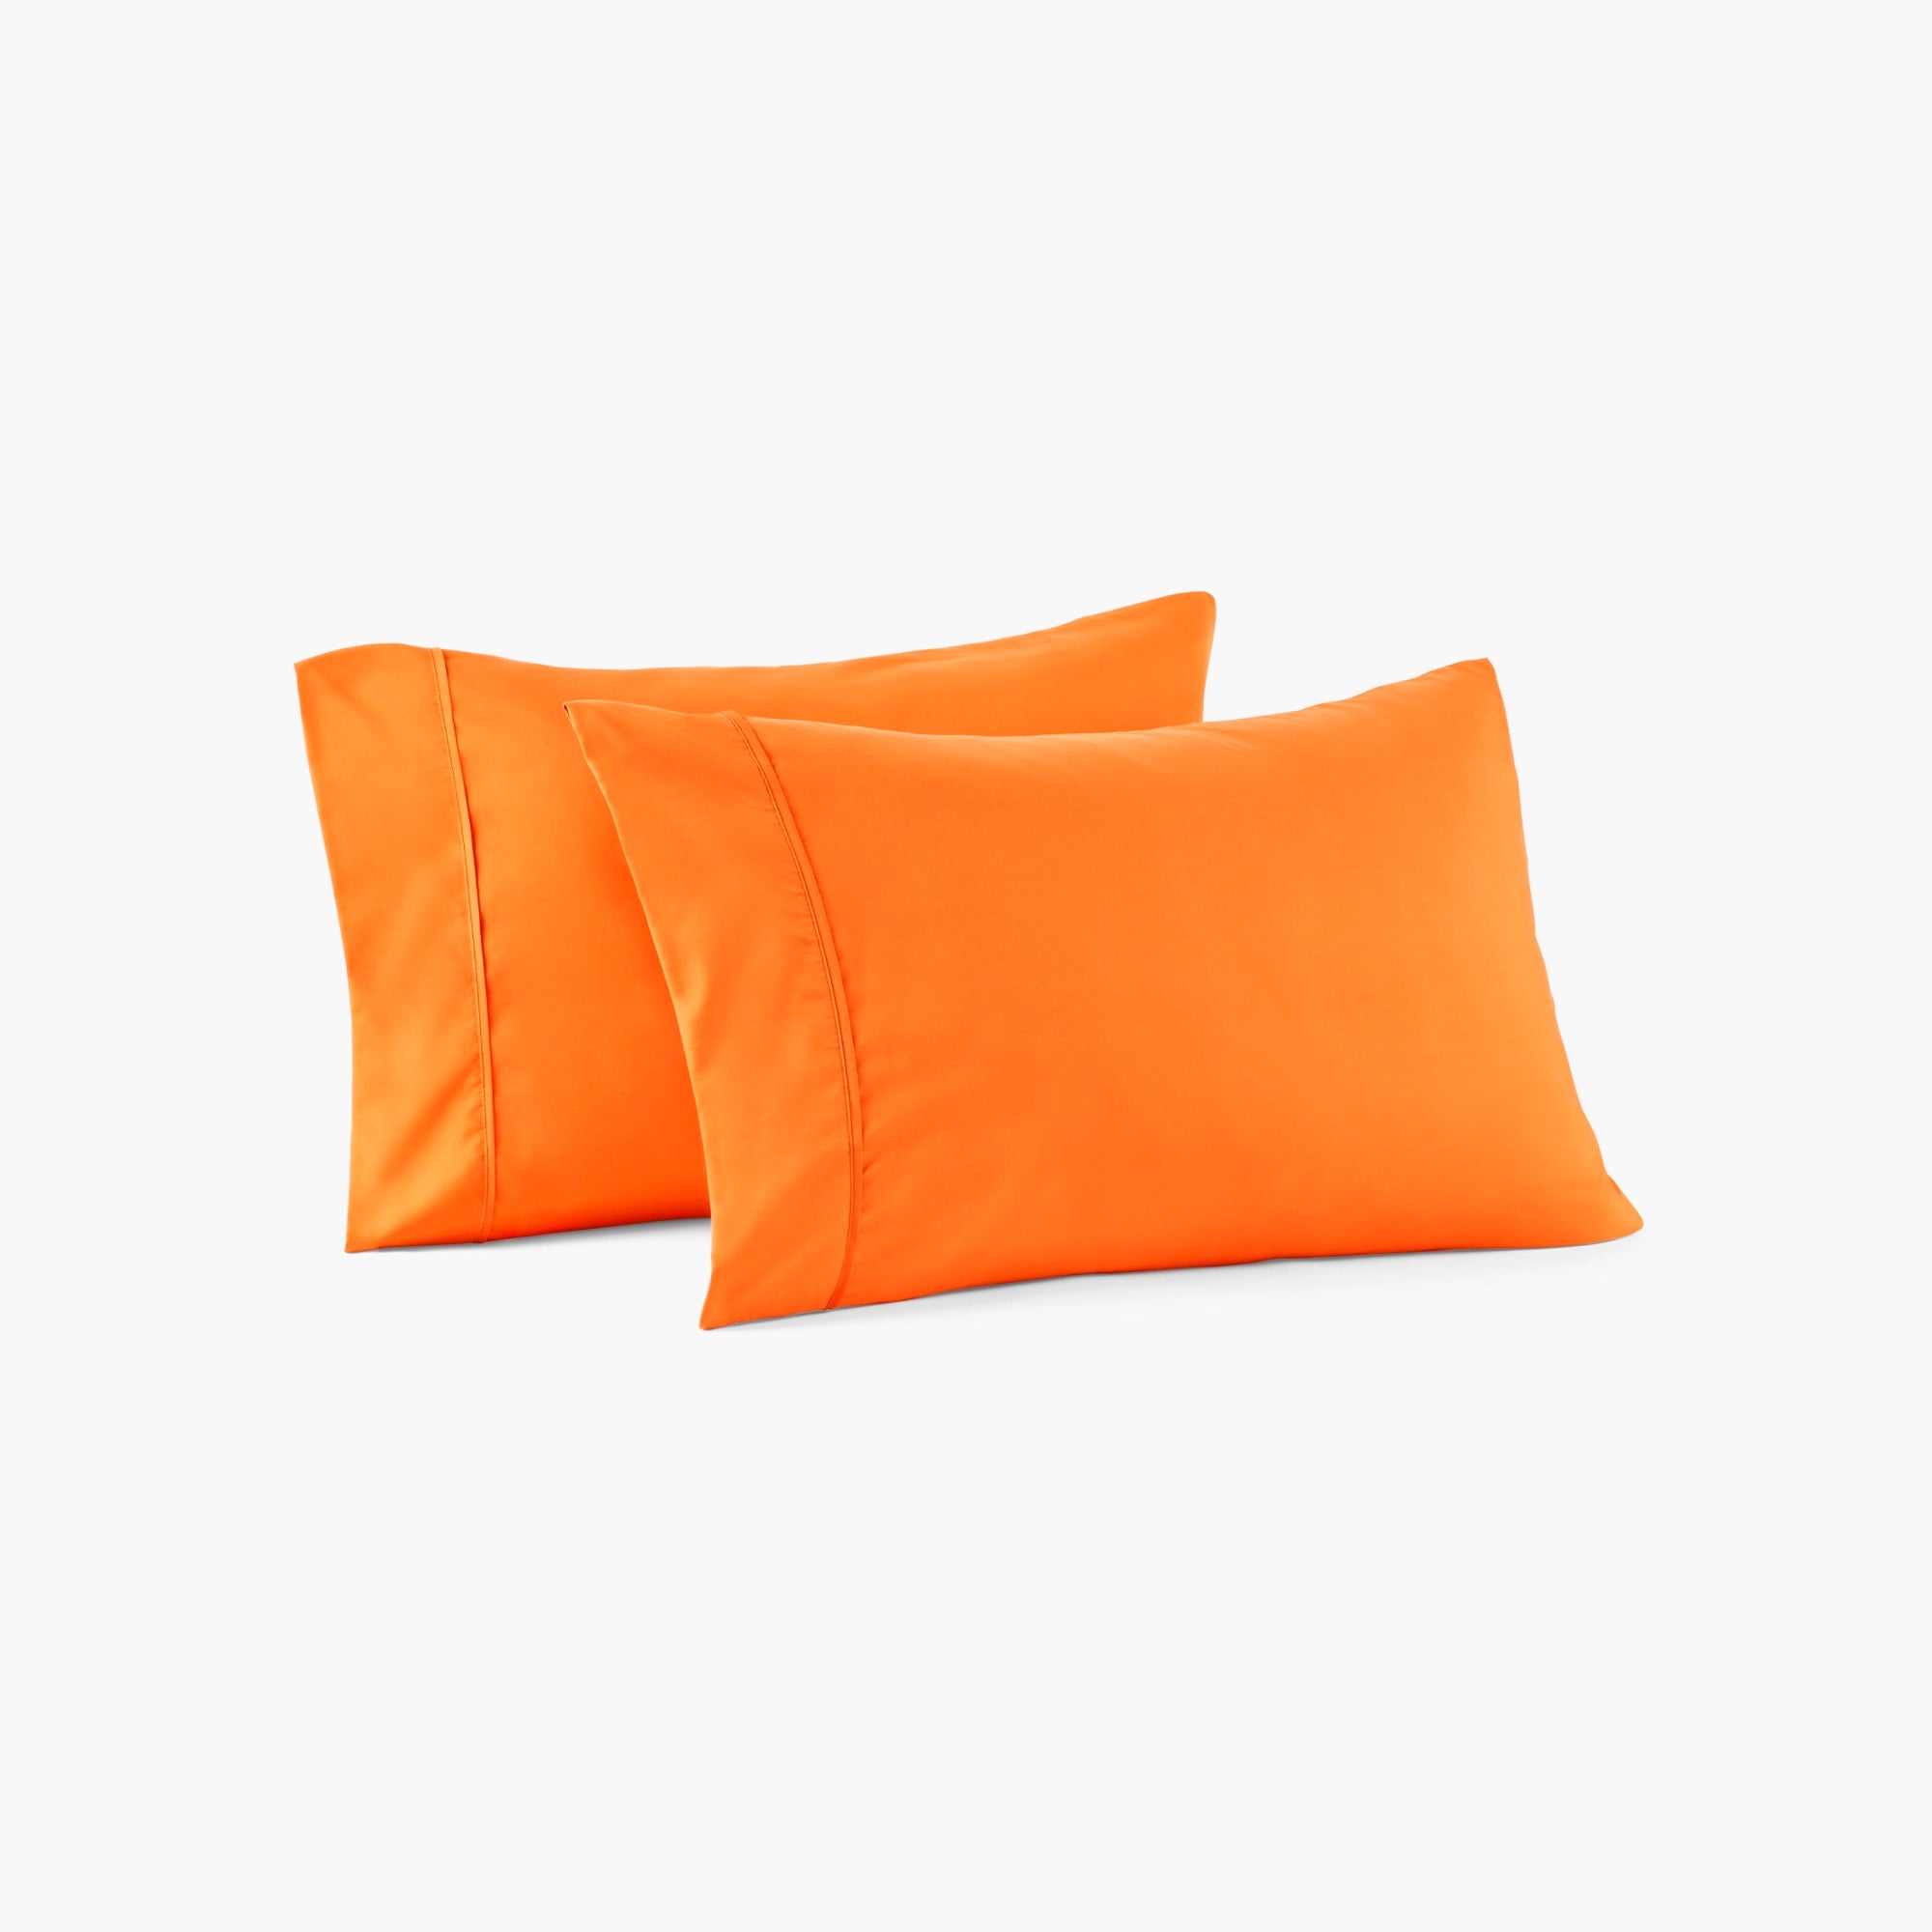 Sunkissed Orange Pillowcase Set